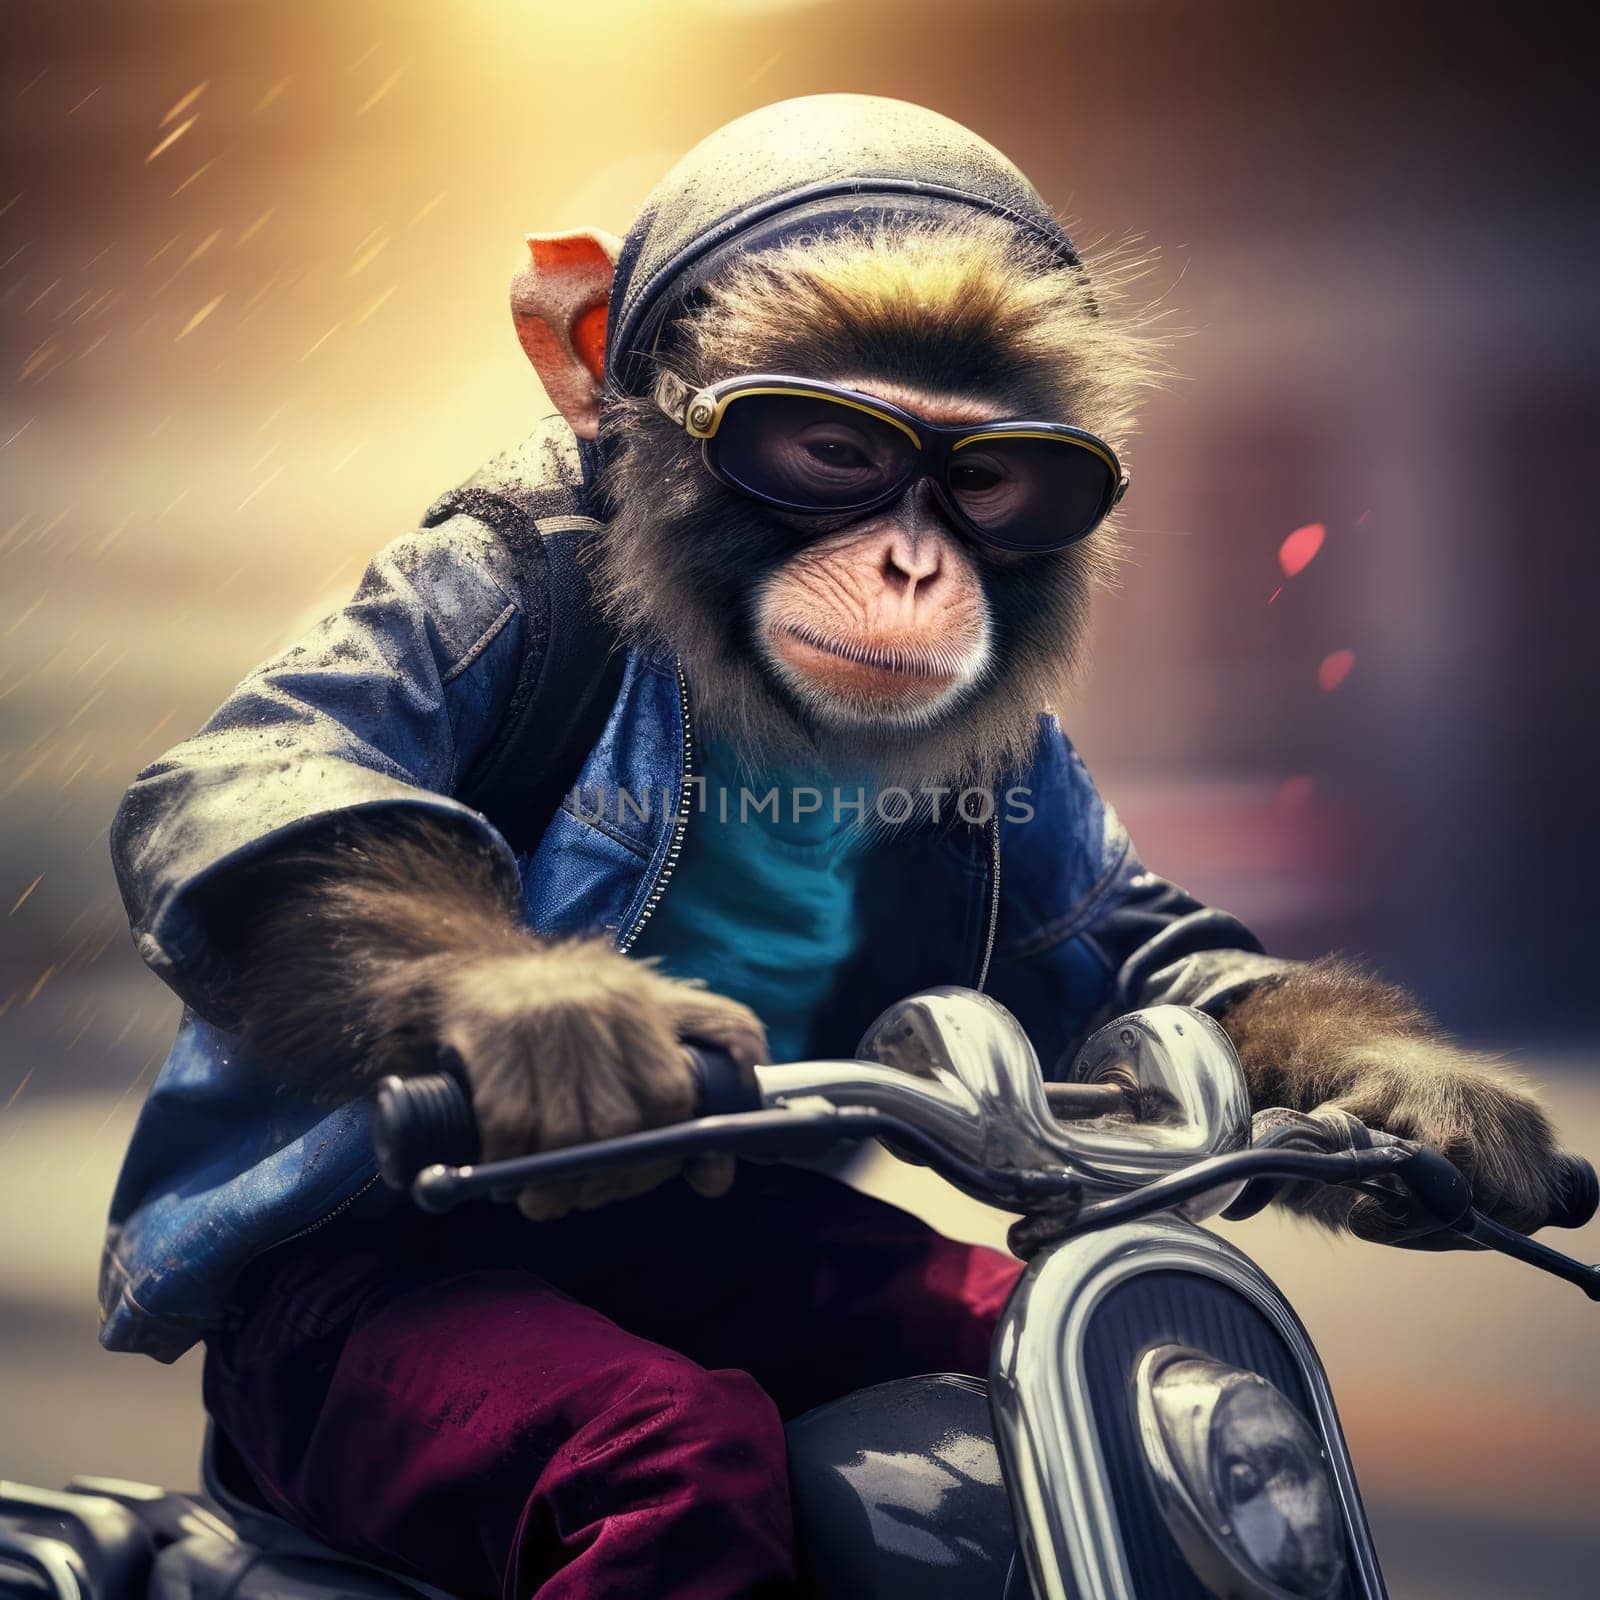 Monkey riding a motorcycle by cherezoff